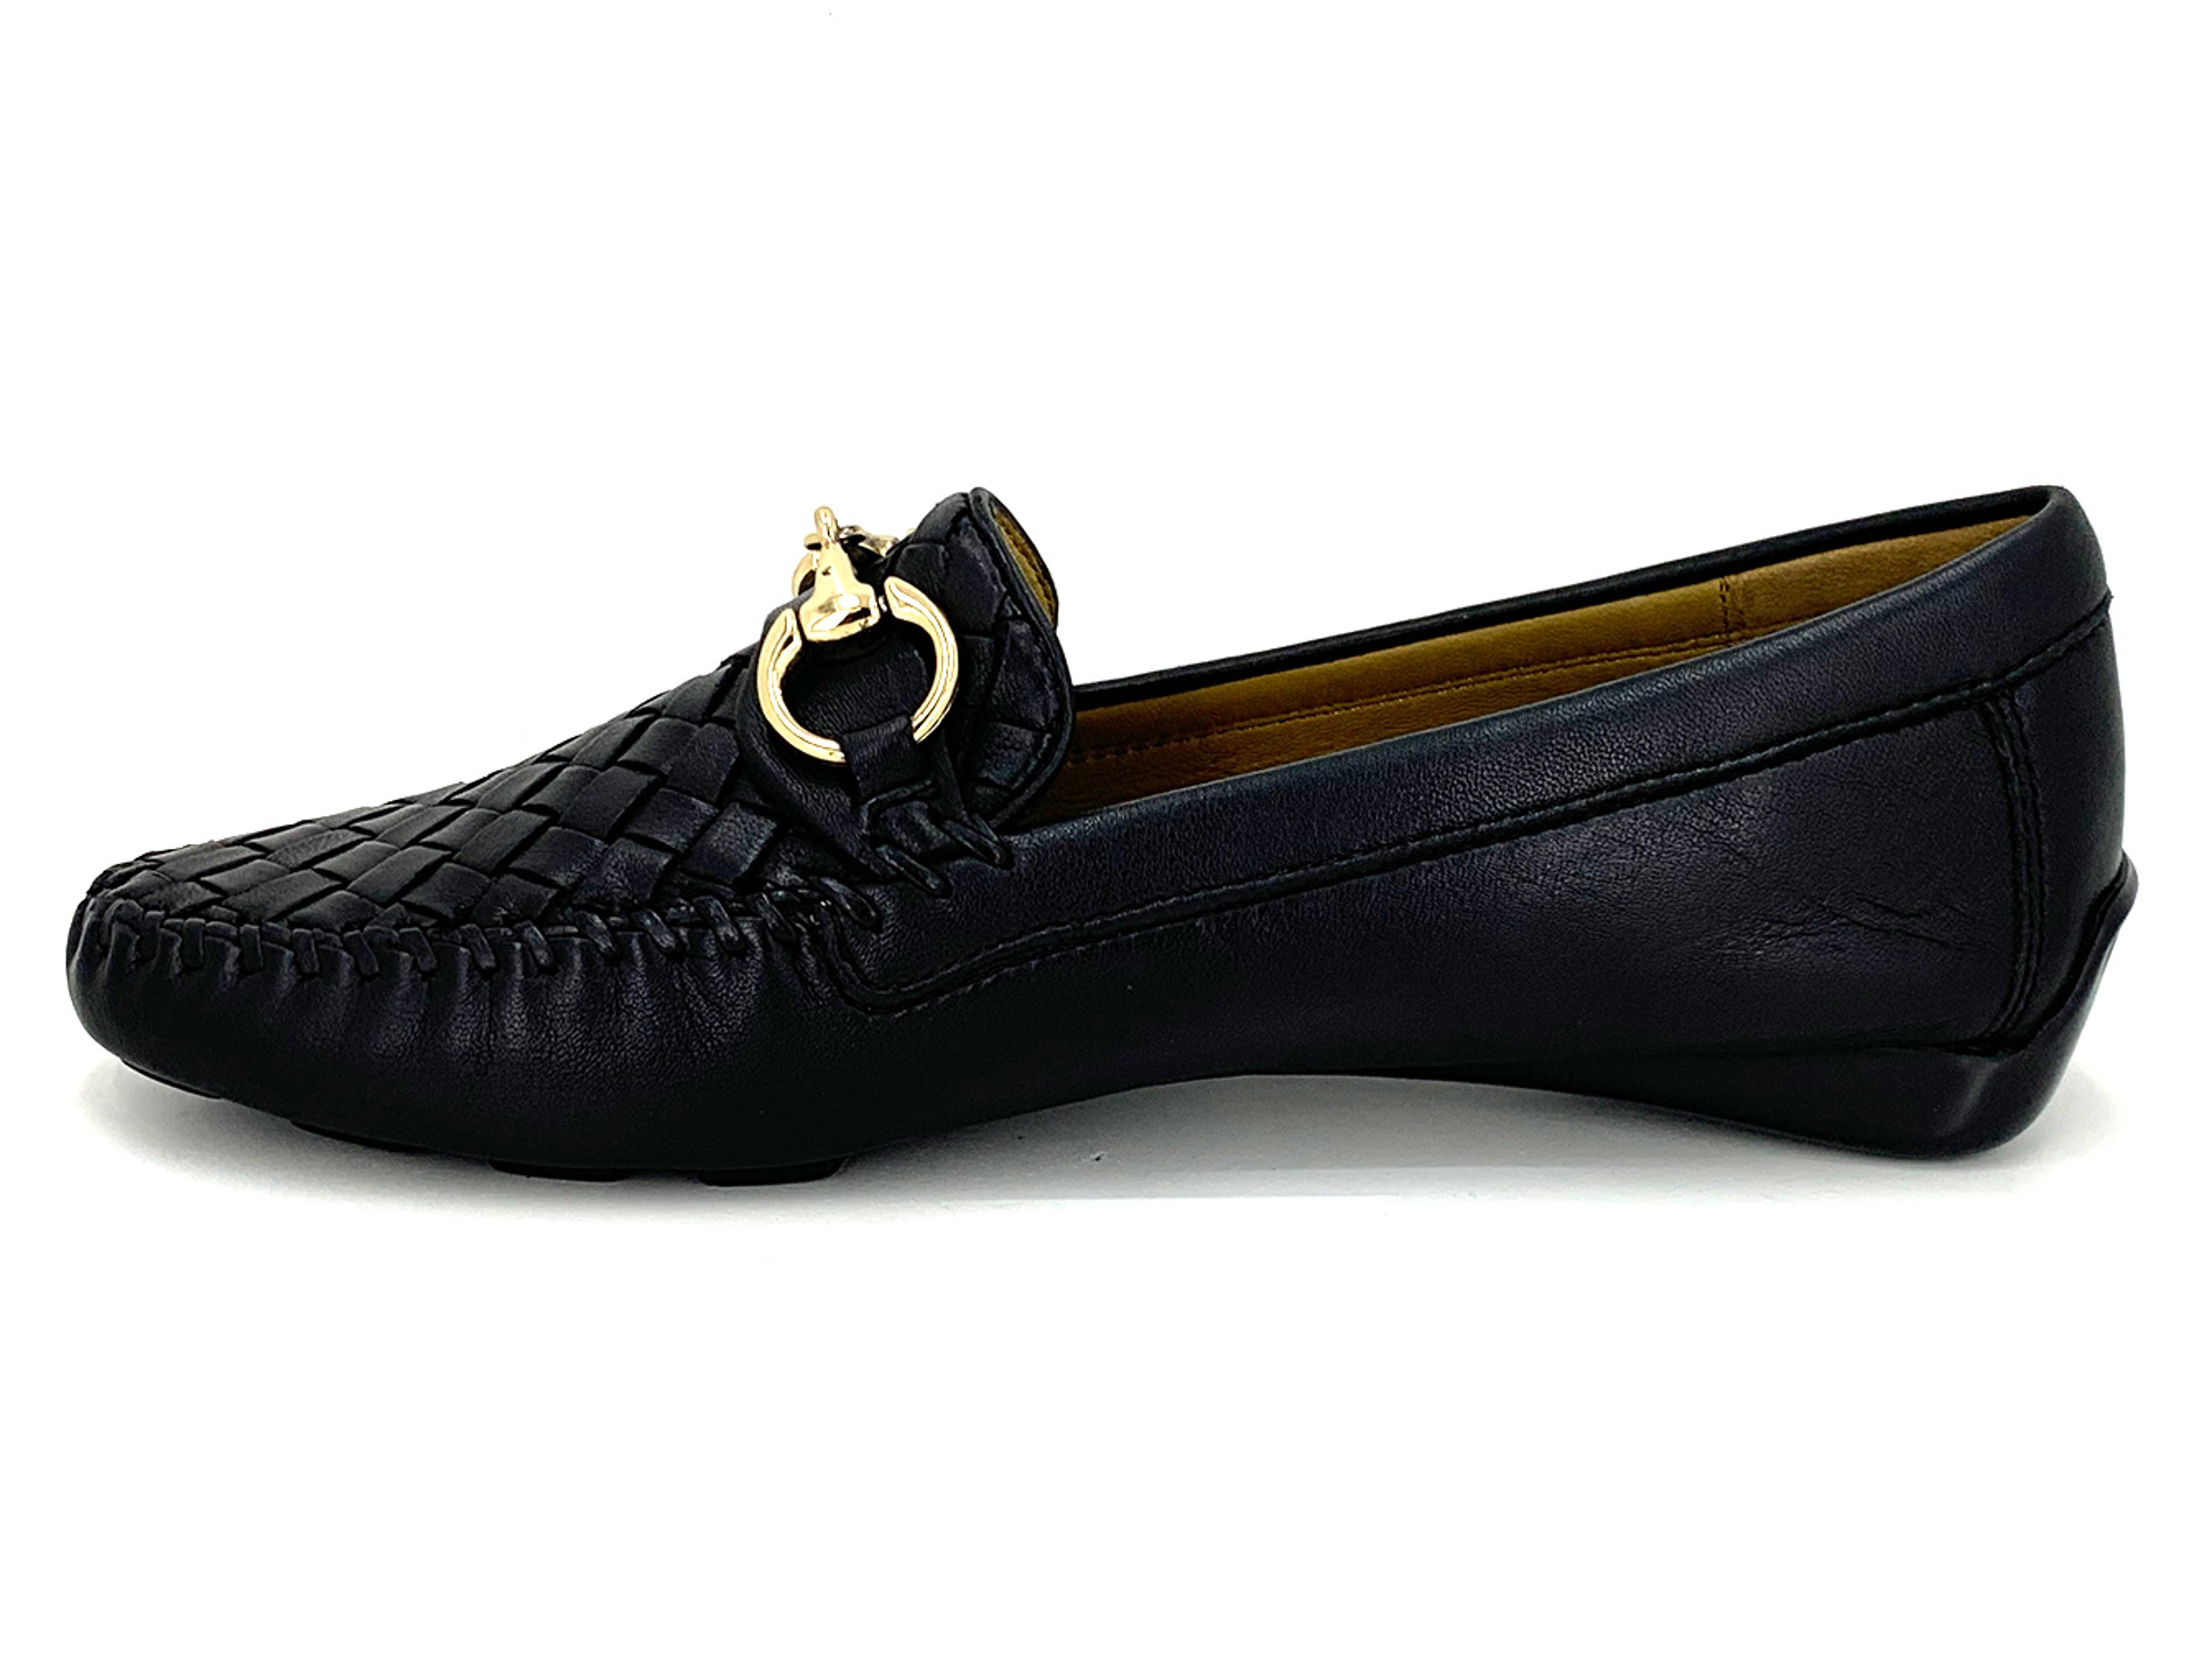 Robert Zur Perlata Women's Loafer Black The Shoe Spa